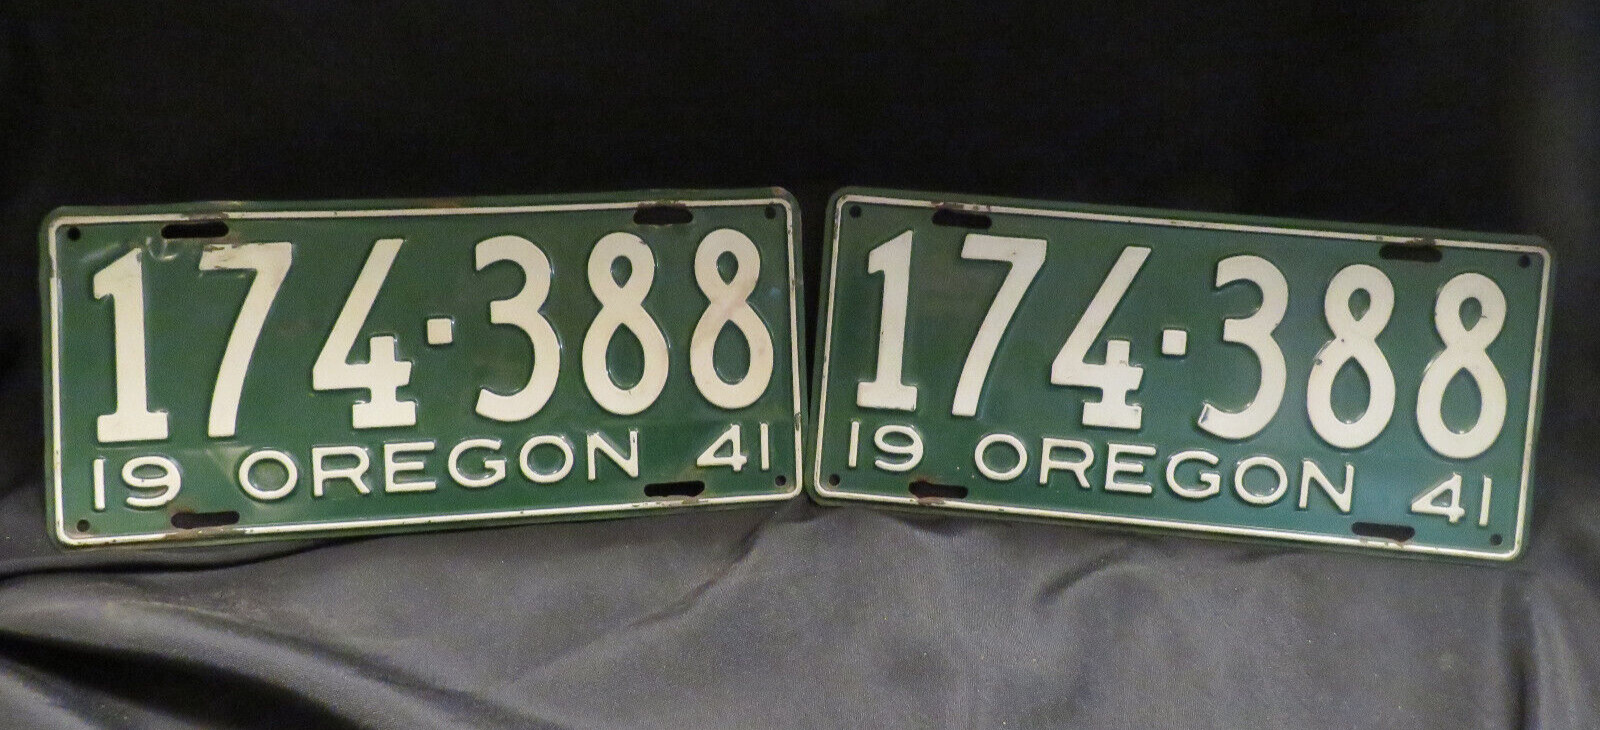 Vintage 1941 Oregon License Plates Matching Pair 174-388